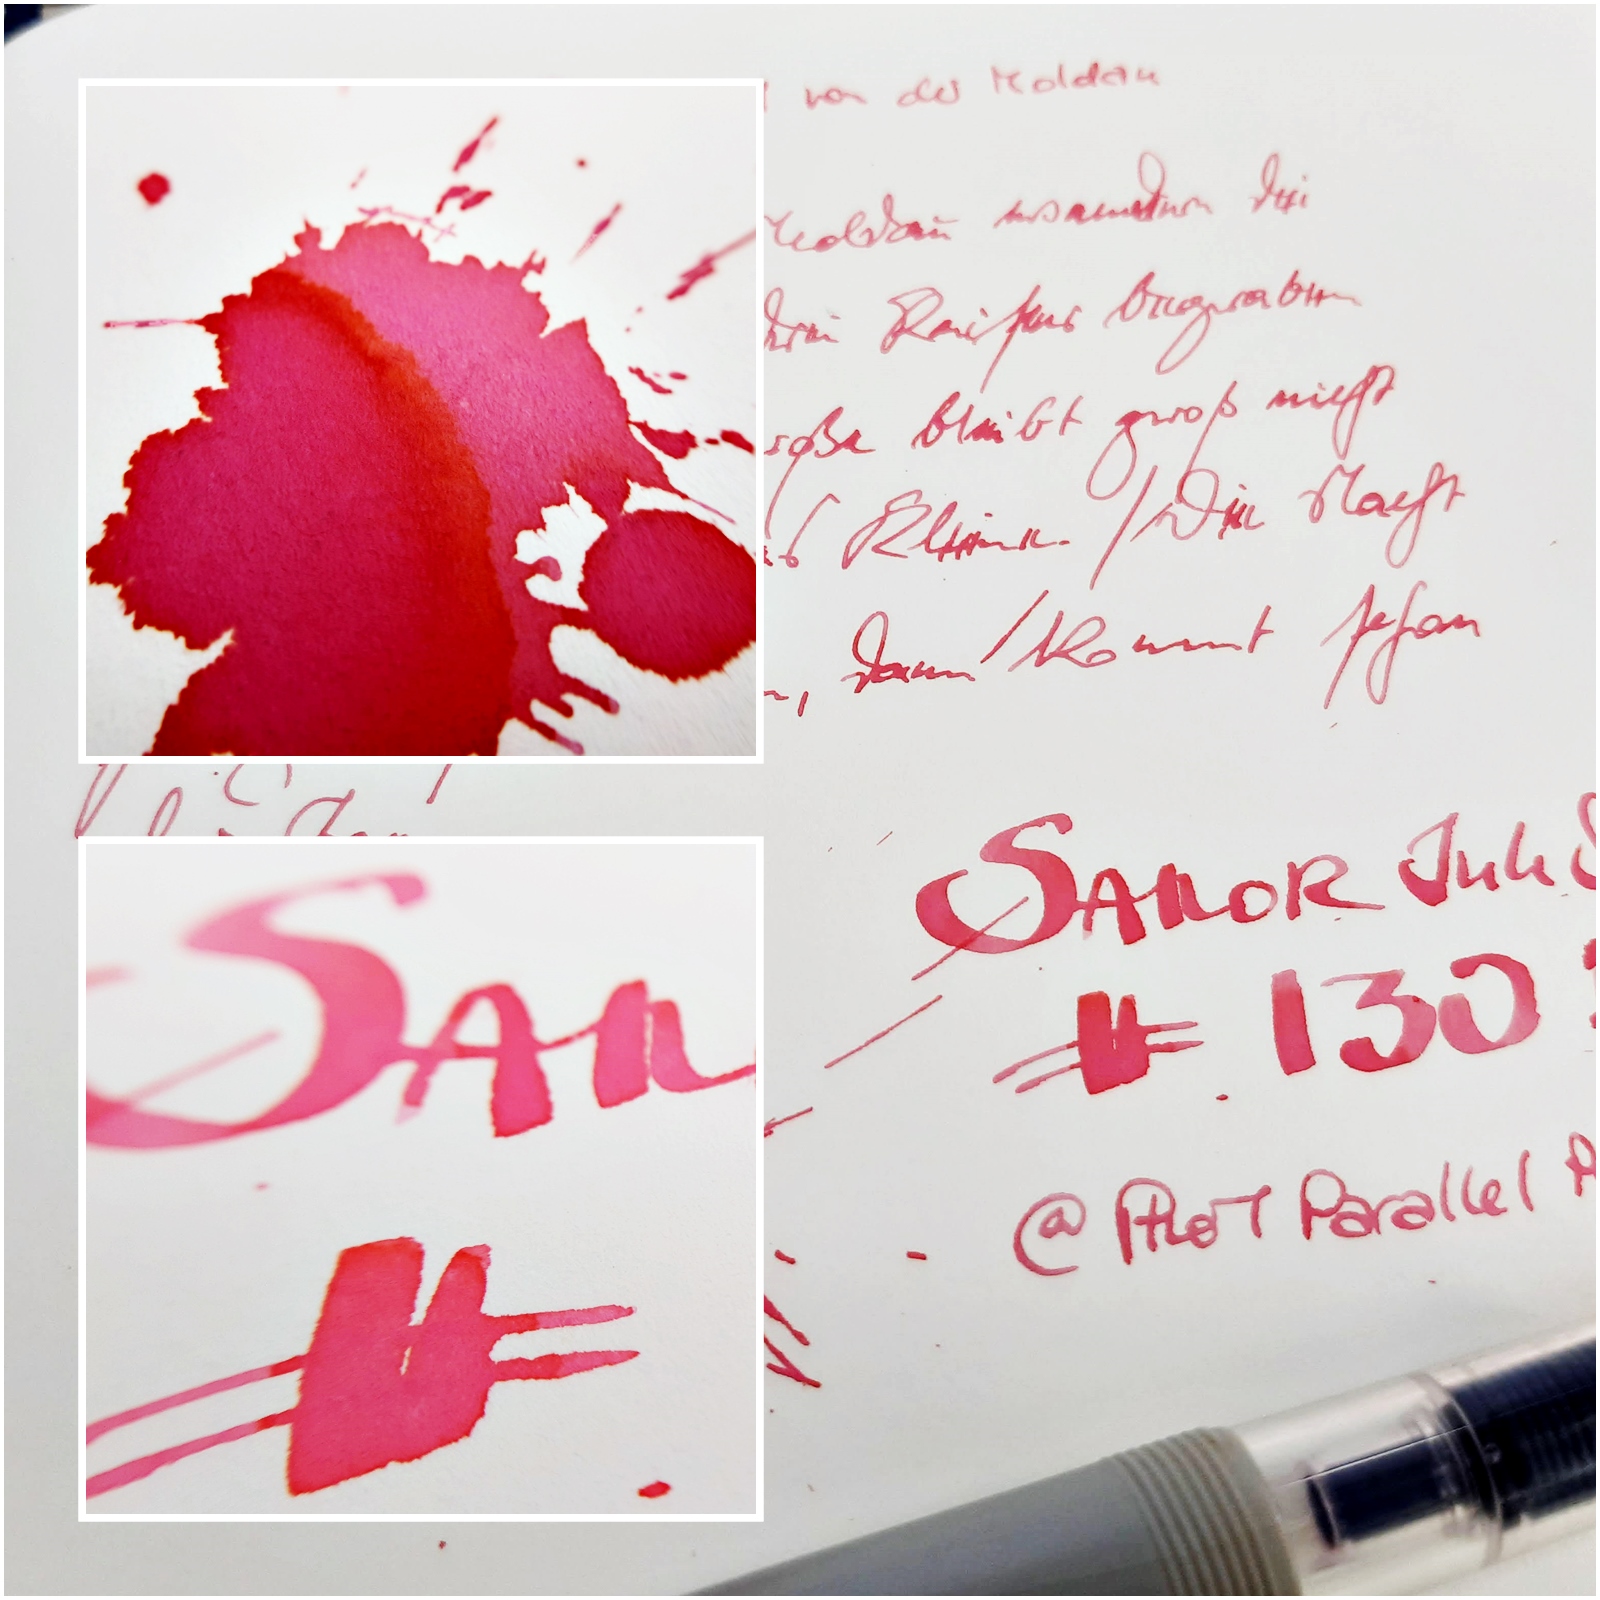 2021 09 24 Sailor Ink Studio 130 Pilot Parallel Pen 2.4 PX.jpg